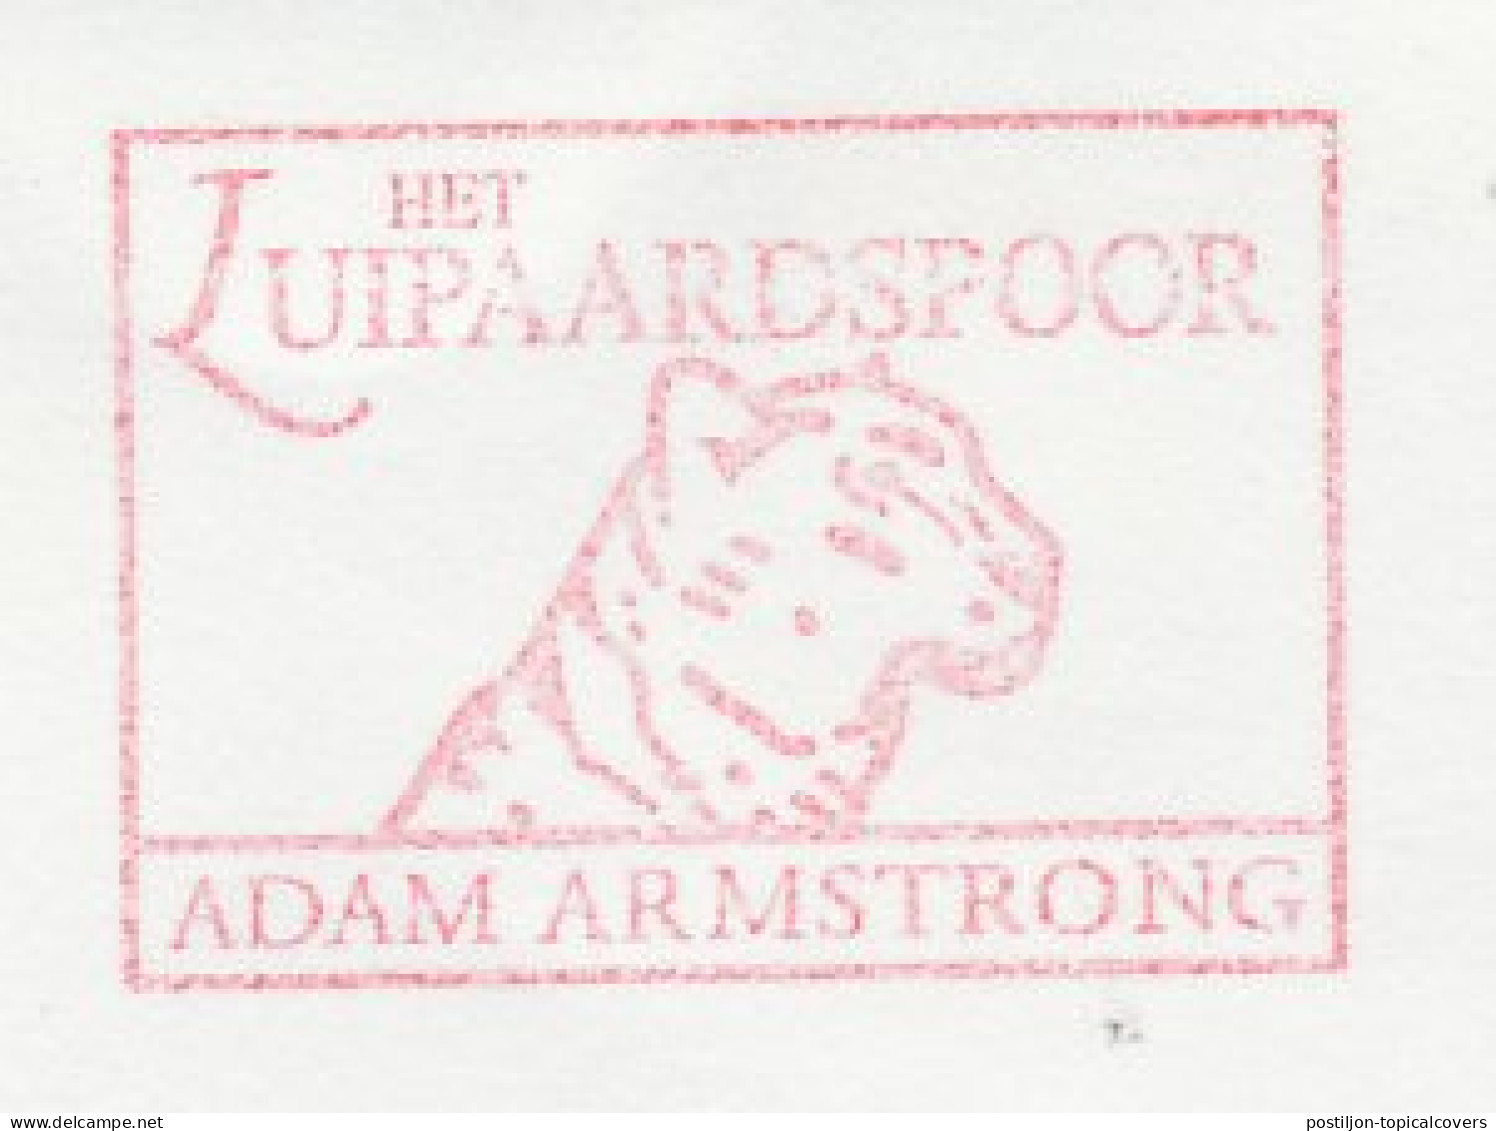 Meter Cut Netherlands 2001 Adam Armstrong - Cry Of The Panther - Het Luipaardspoor - Book - Ecrivains